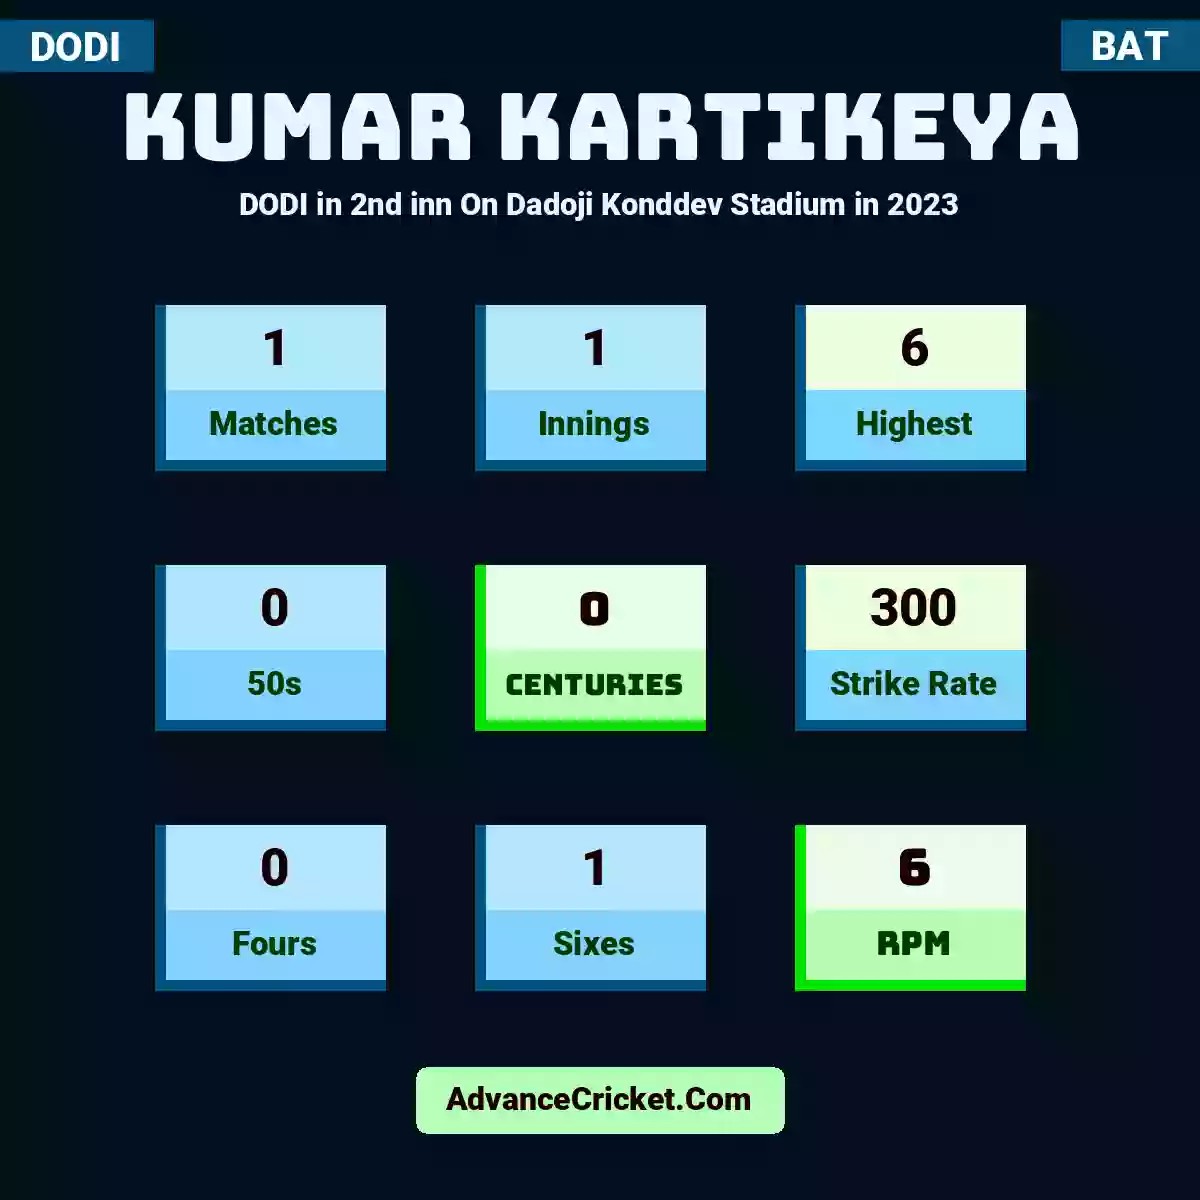 Kumar Kartikeya DODI  in 2nd inn On Dadoji Konddev Stadium in 2023, Kumar Kartikeya played 1 matches, scored 6 runs as highest, 0 half-centuries, and 0 centuries, with a strike rate of 300. K.Kartikeya hit 0 fours and 1 sixes, with an RPM of 6.